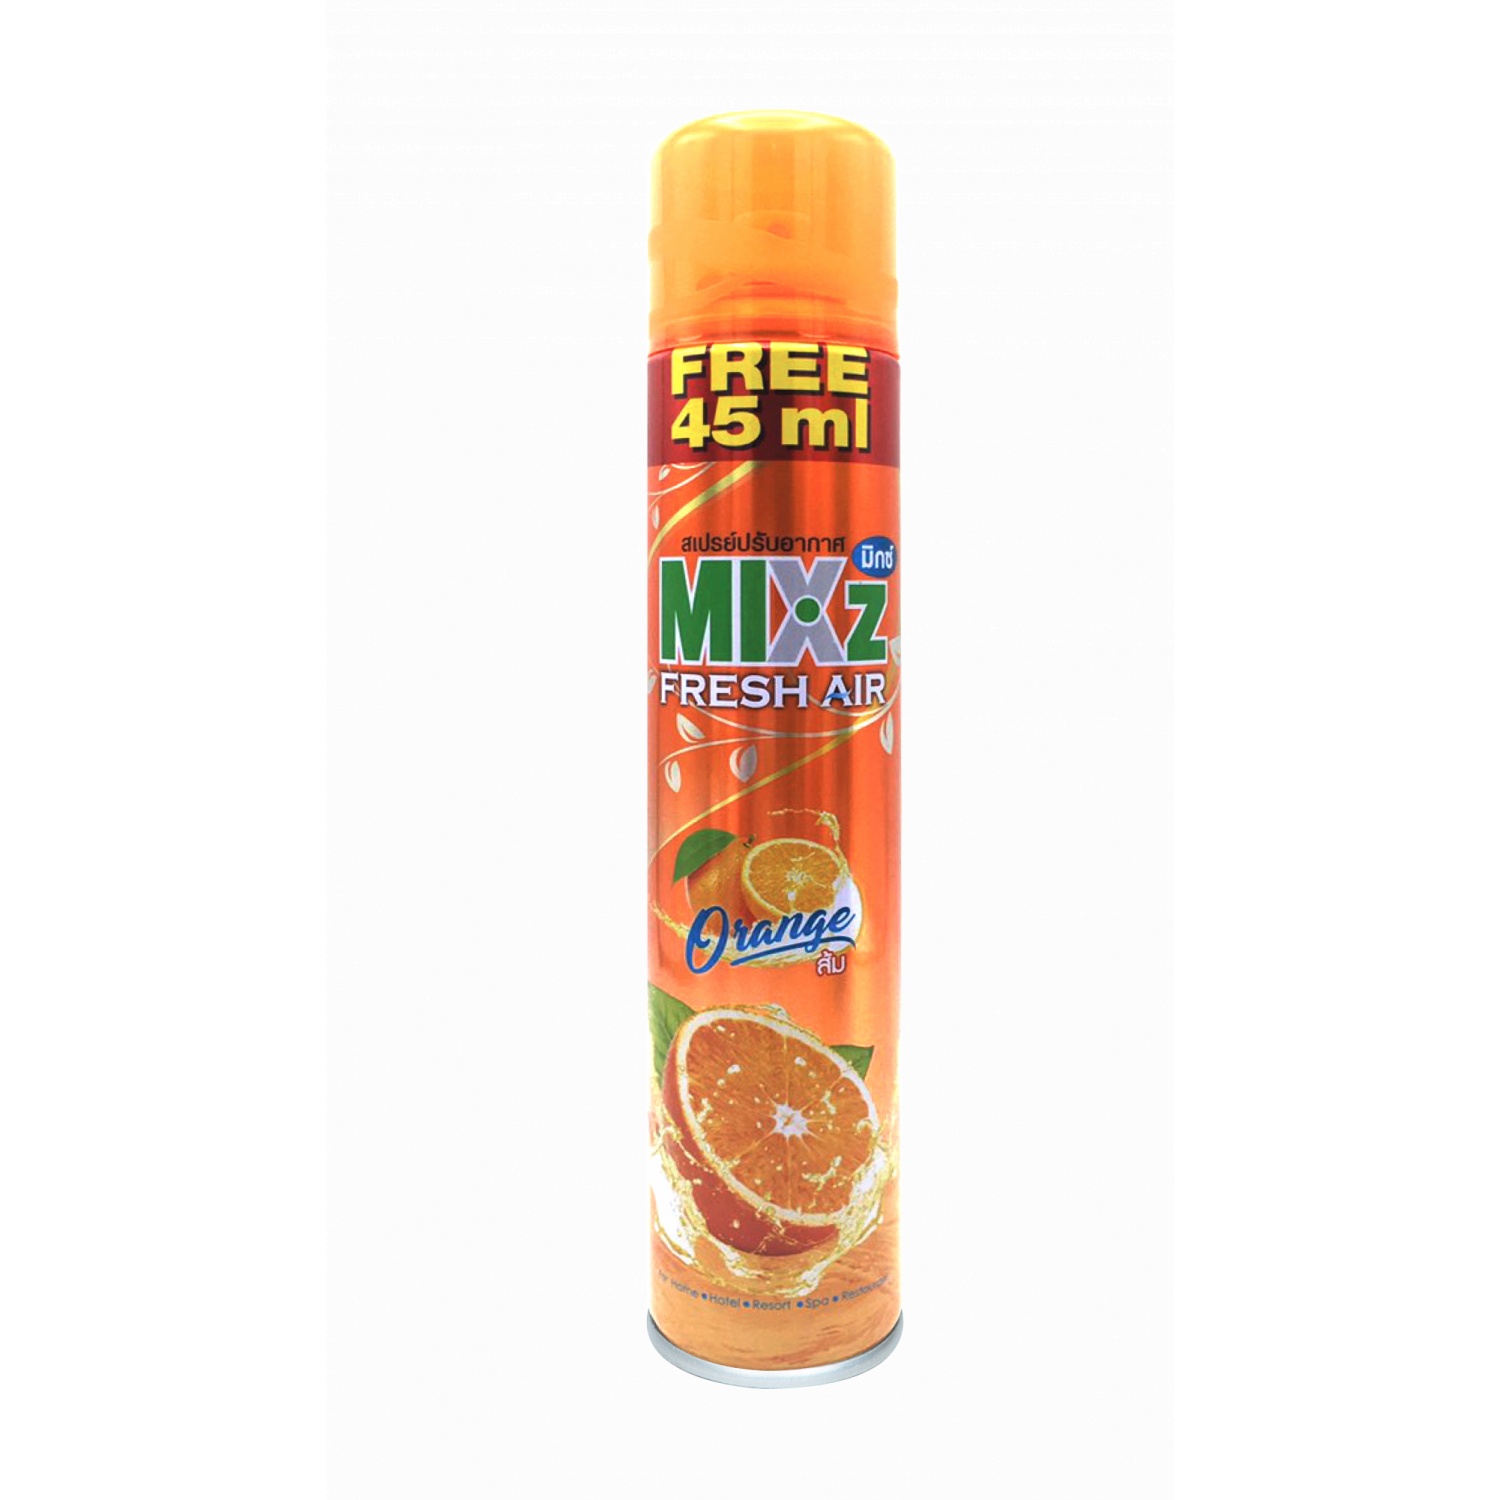 MIXz สเปรย์ปรับอากาศ กลิ่นส้ม 320 มล. รุ่น fresh air